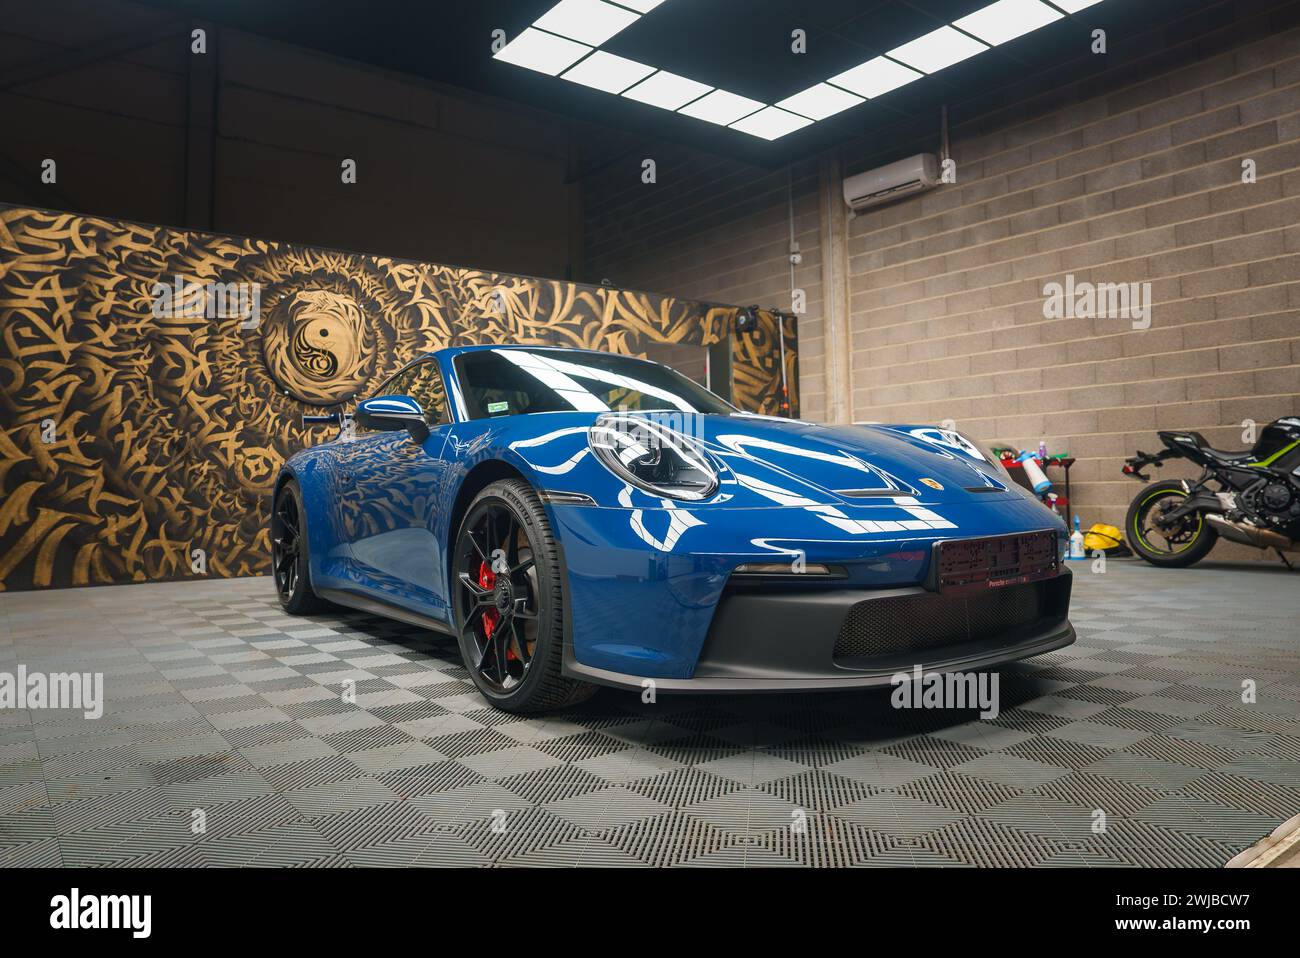 Blue Porsche 911 GT3 with Artistic Mural Backdrop in Modern Garage Stock Photo